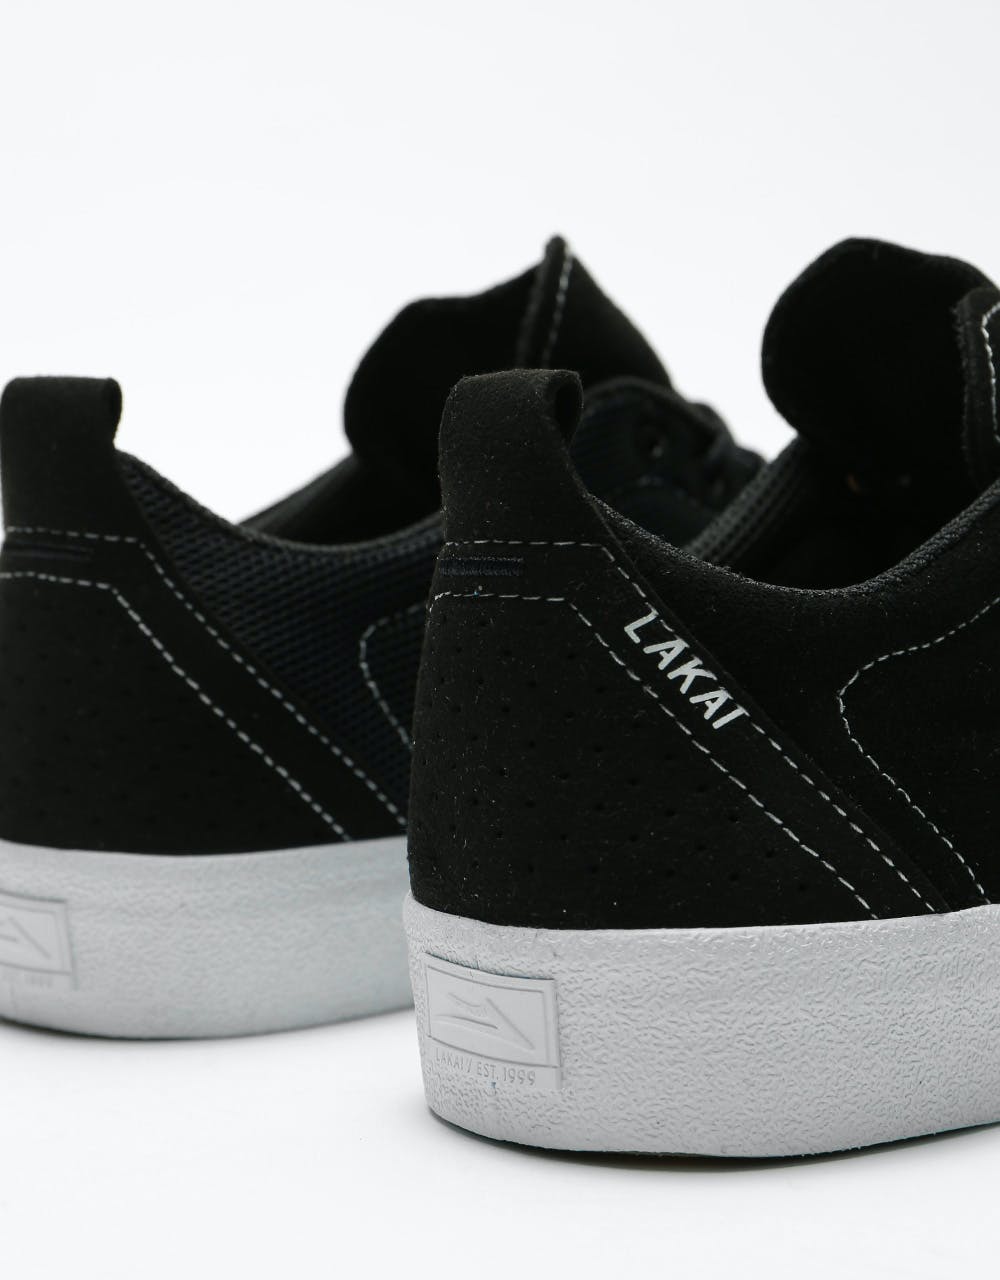 Lakai Bristol Skate Shoes - Black/White Suede